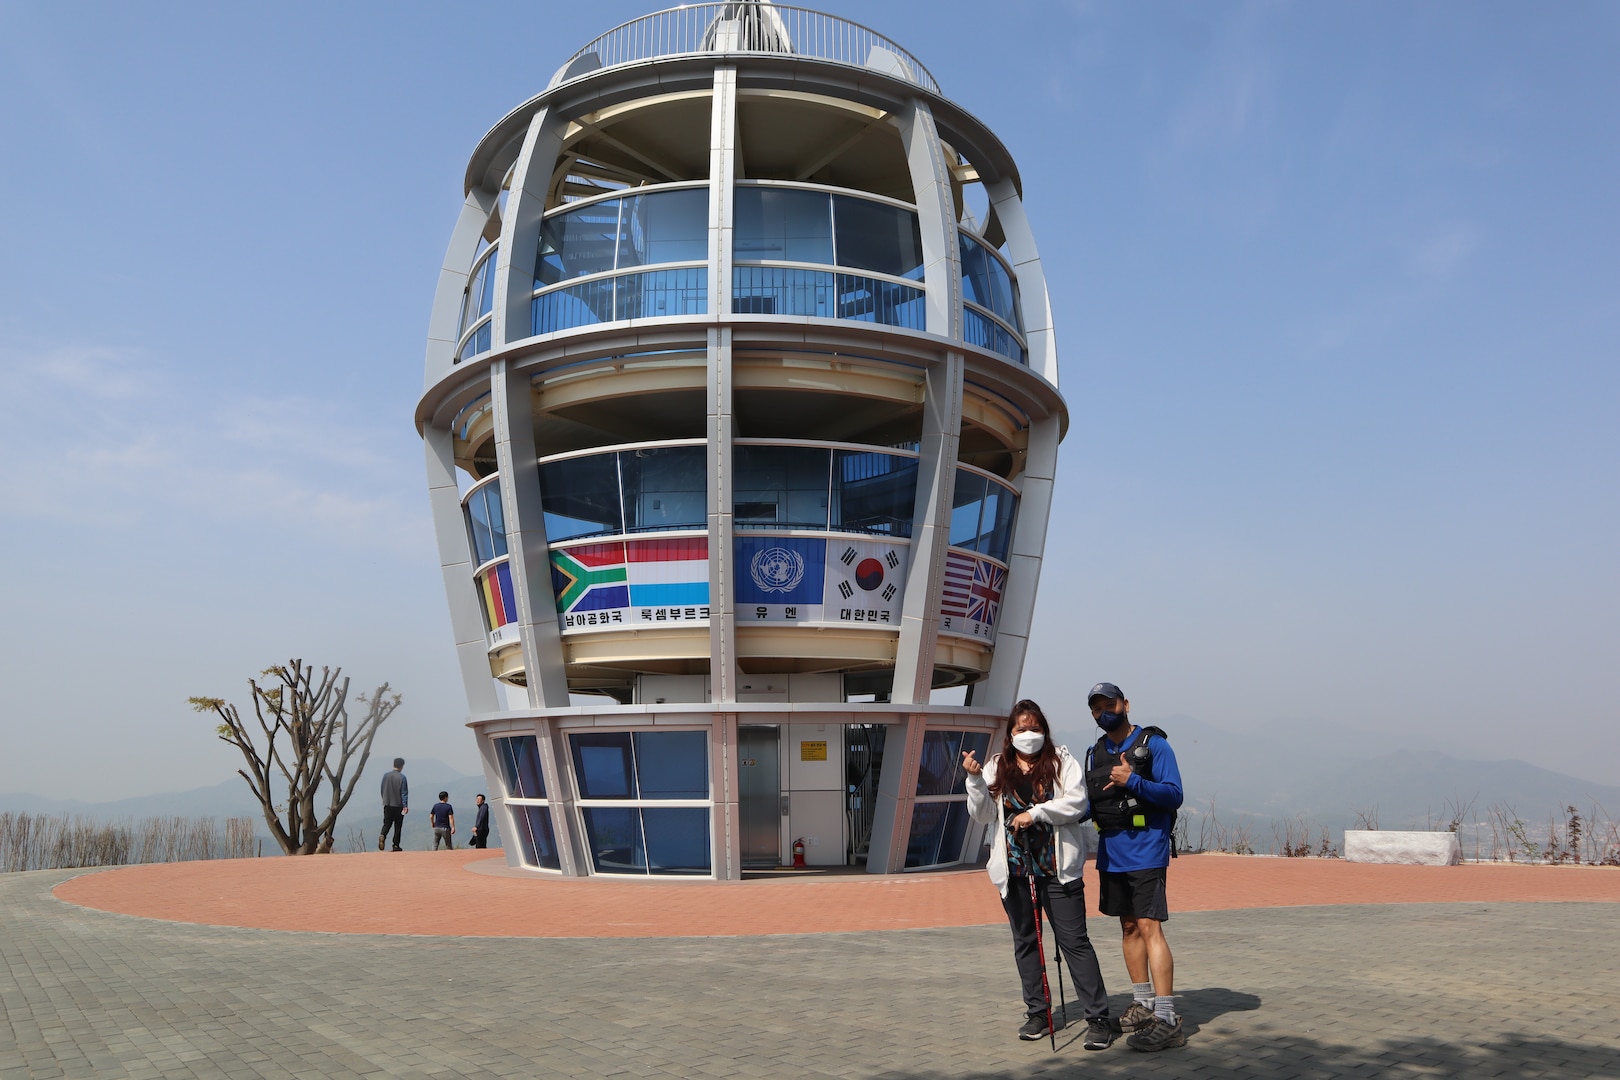 DLA Distribution Korea walks, hikes, bikes 1,151 miles for DLA Teal Ribbon Relay